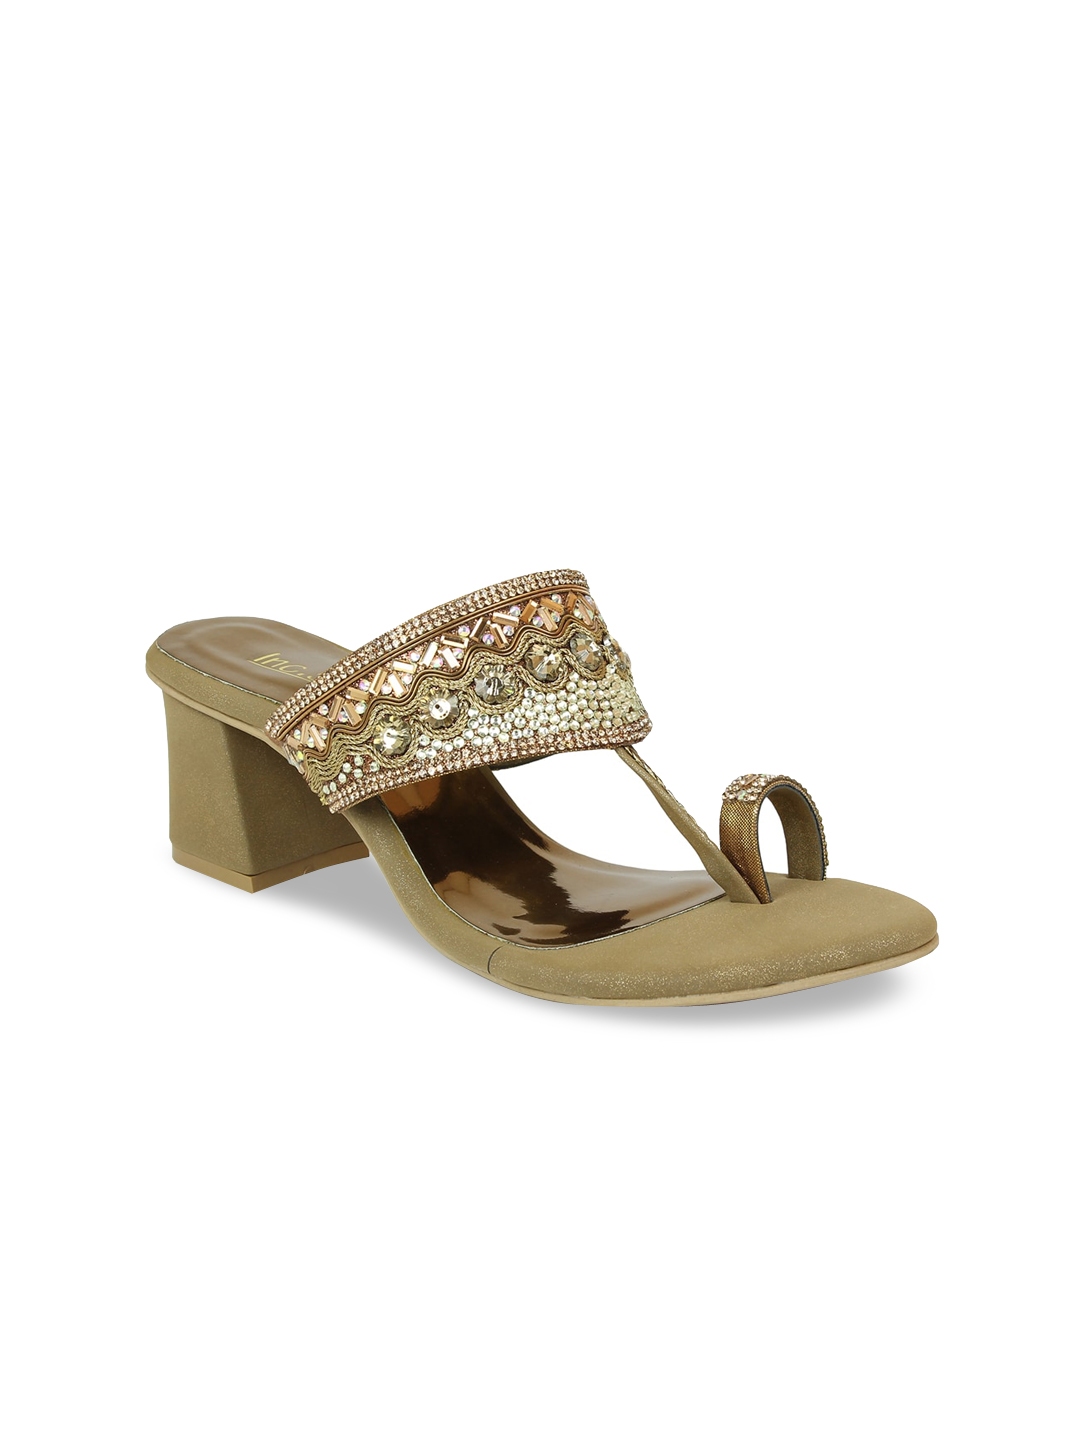 Buy Inc 5 Gold Toned Embellished Ethnic Block Sandals - Heels for Women ...